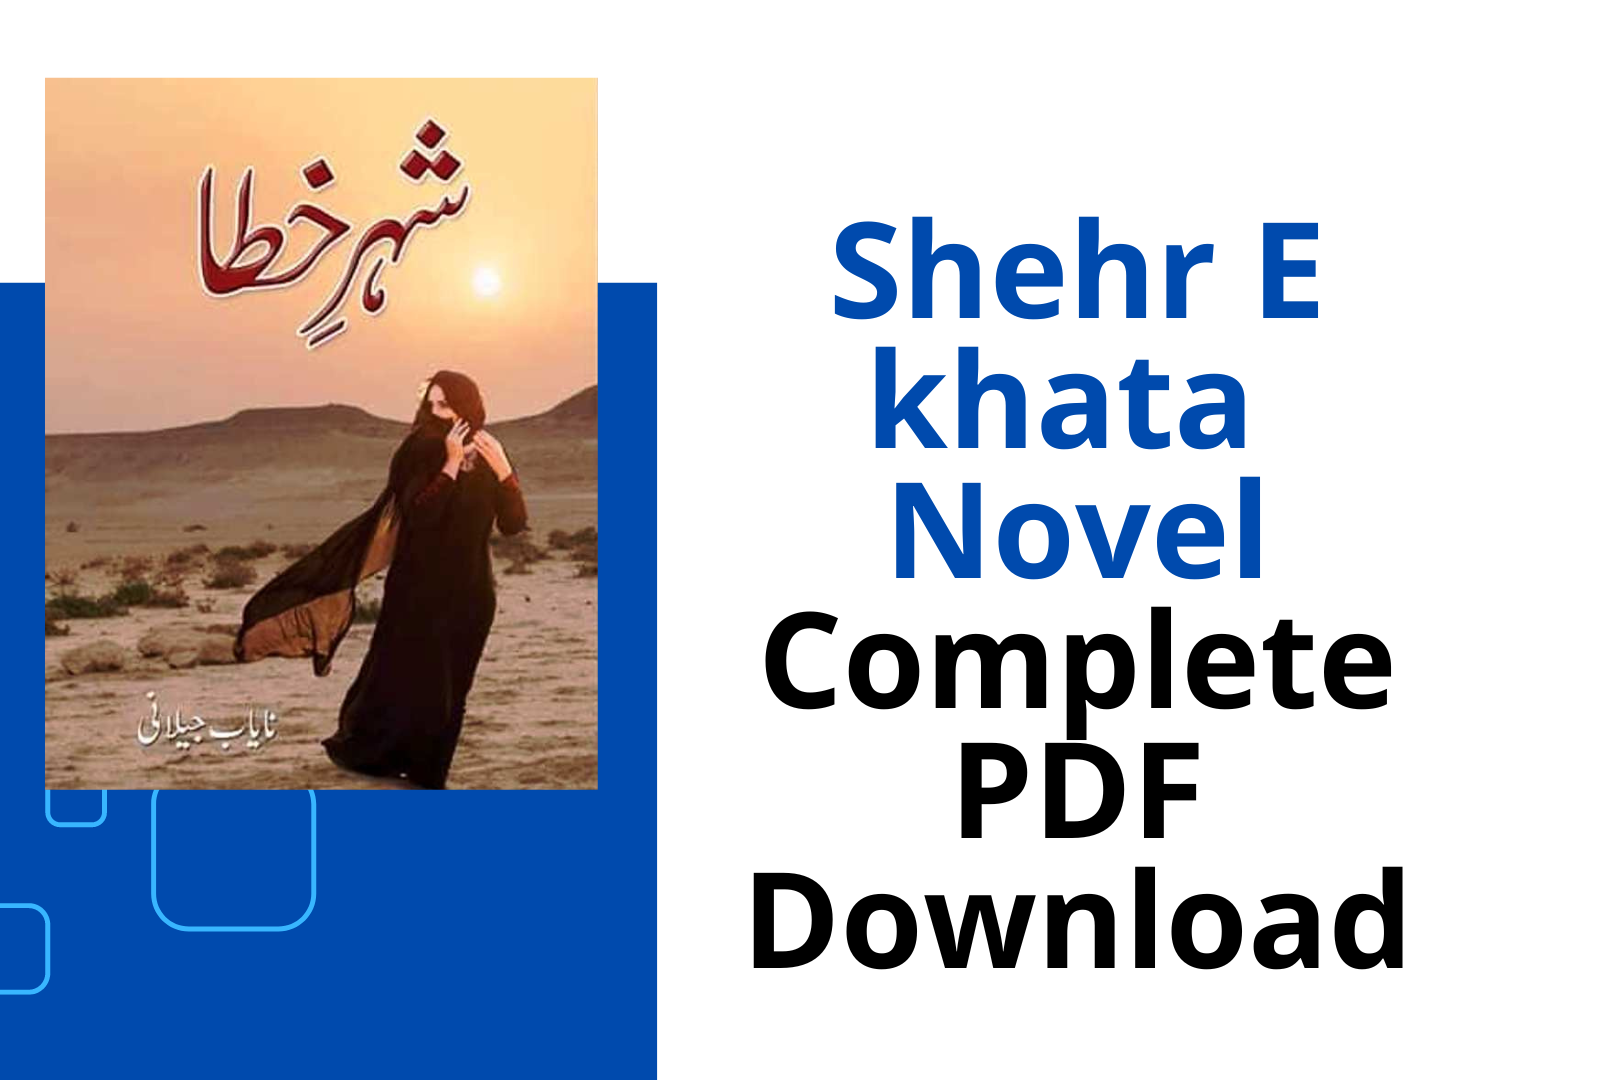 Shehr E khata Novel Complete PDF Download